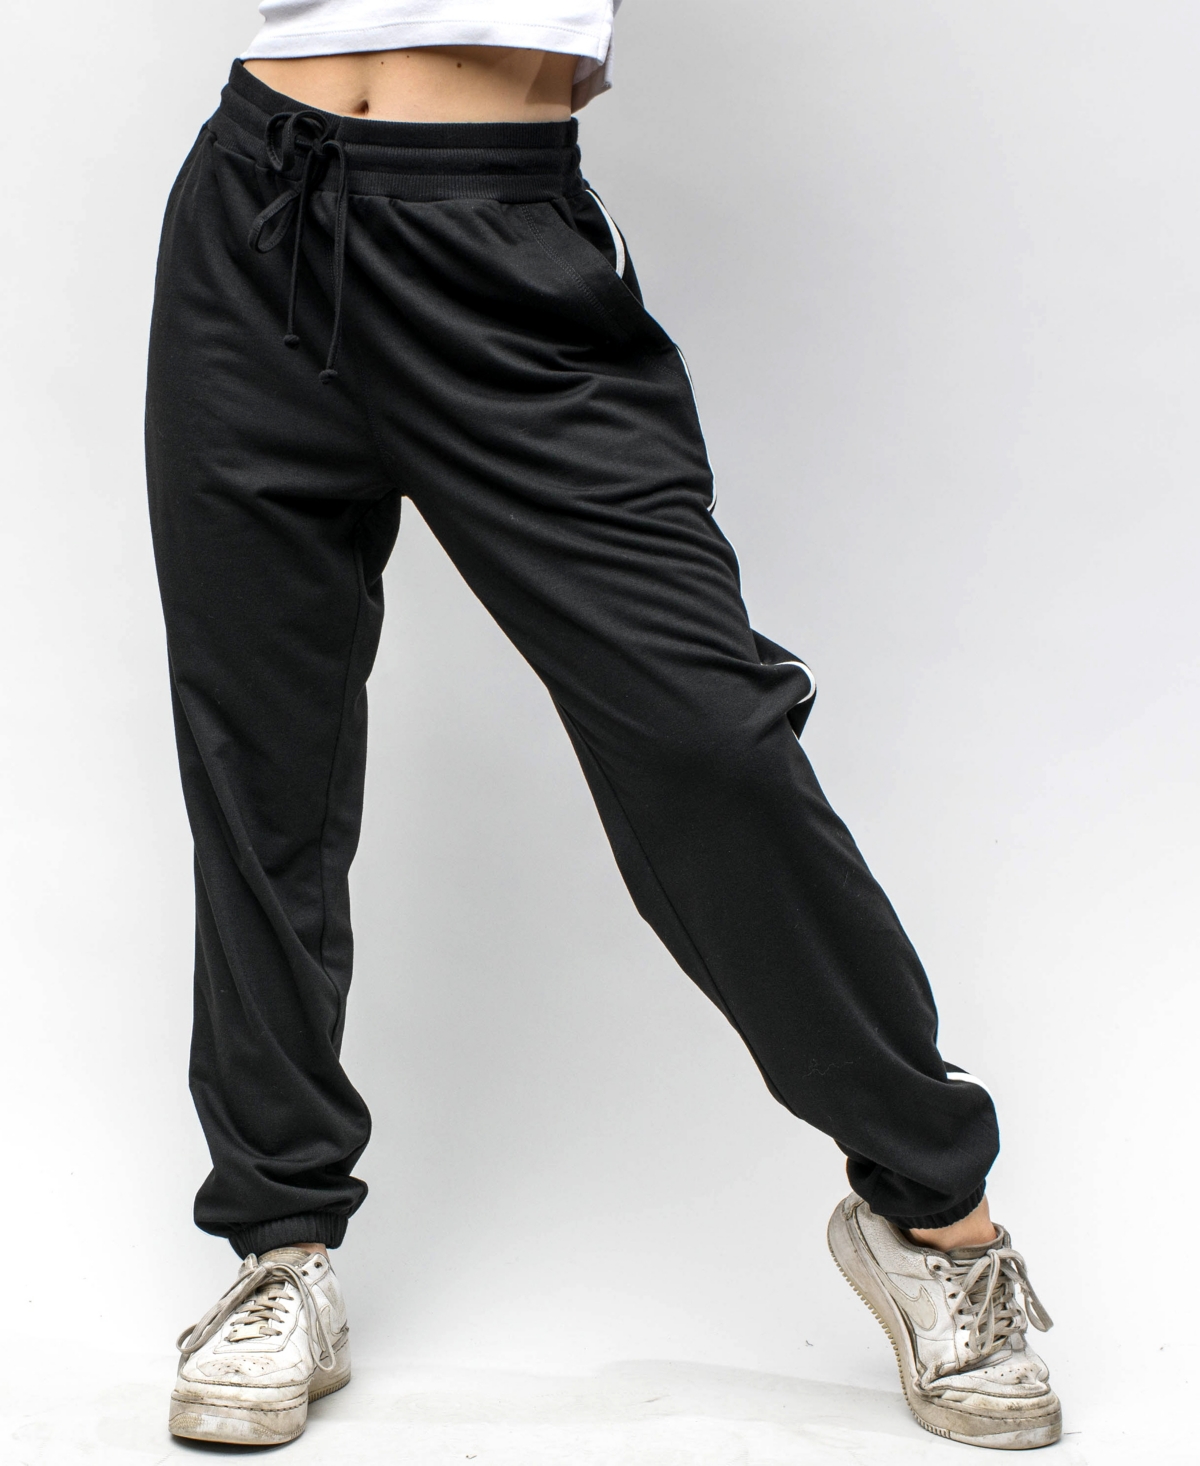 Women's Drawstring Sweat Pants with Stripe - Charcoal, Black